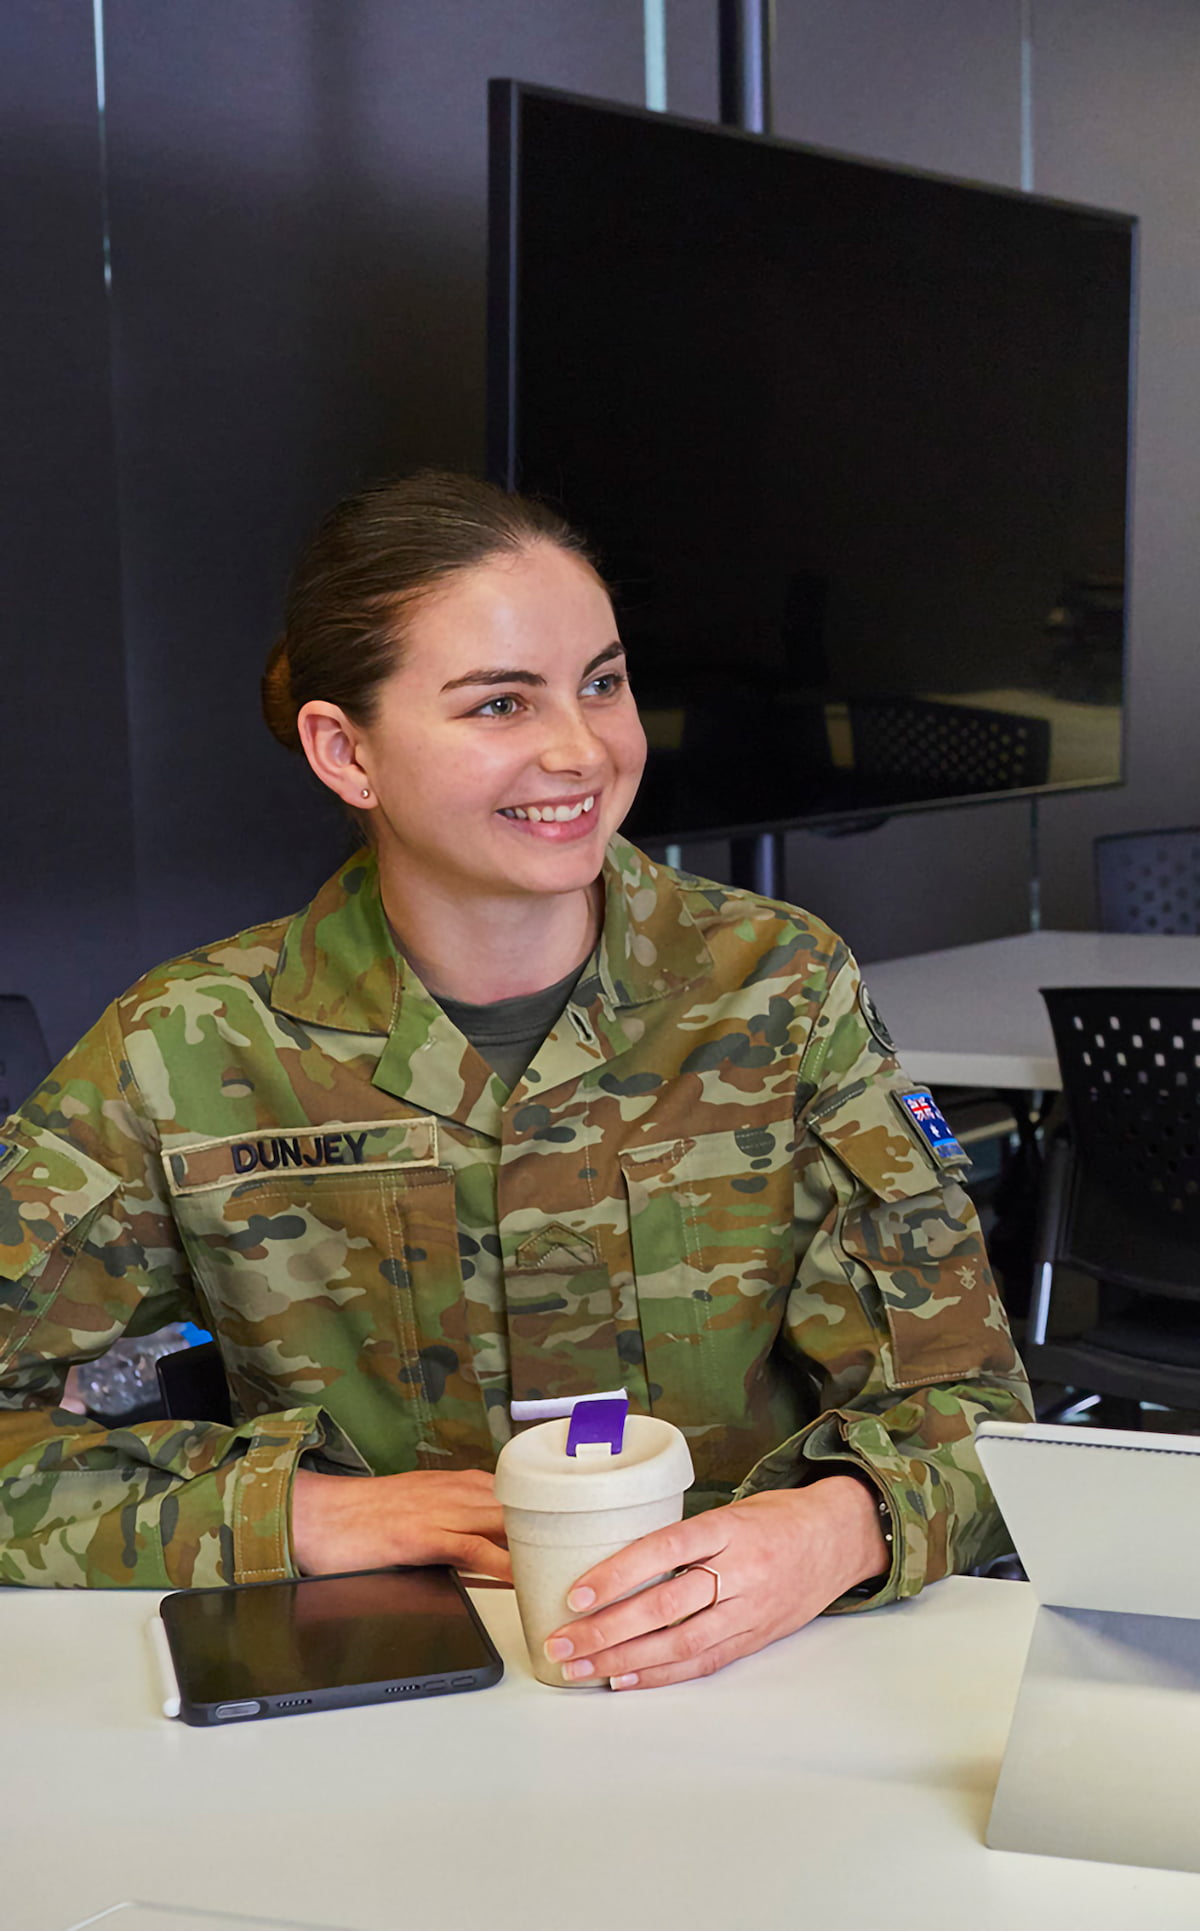 Woman in army uniform works in a lab.